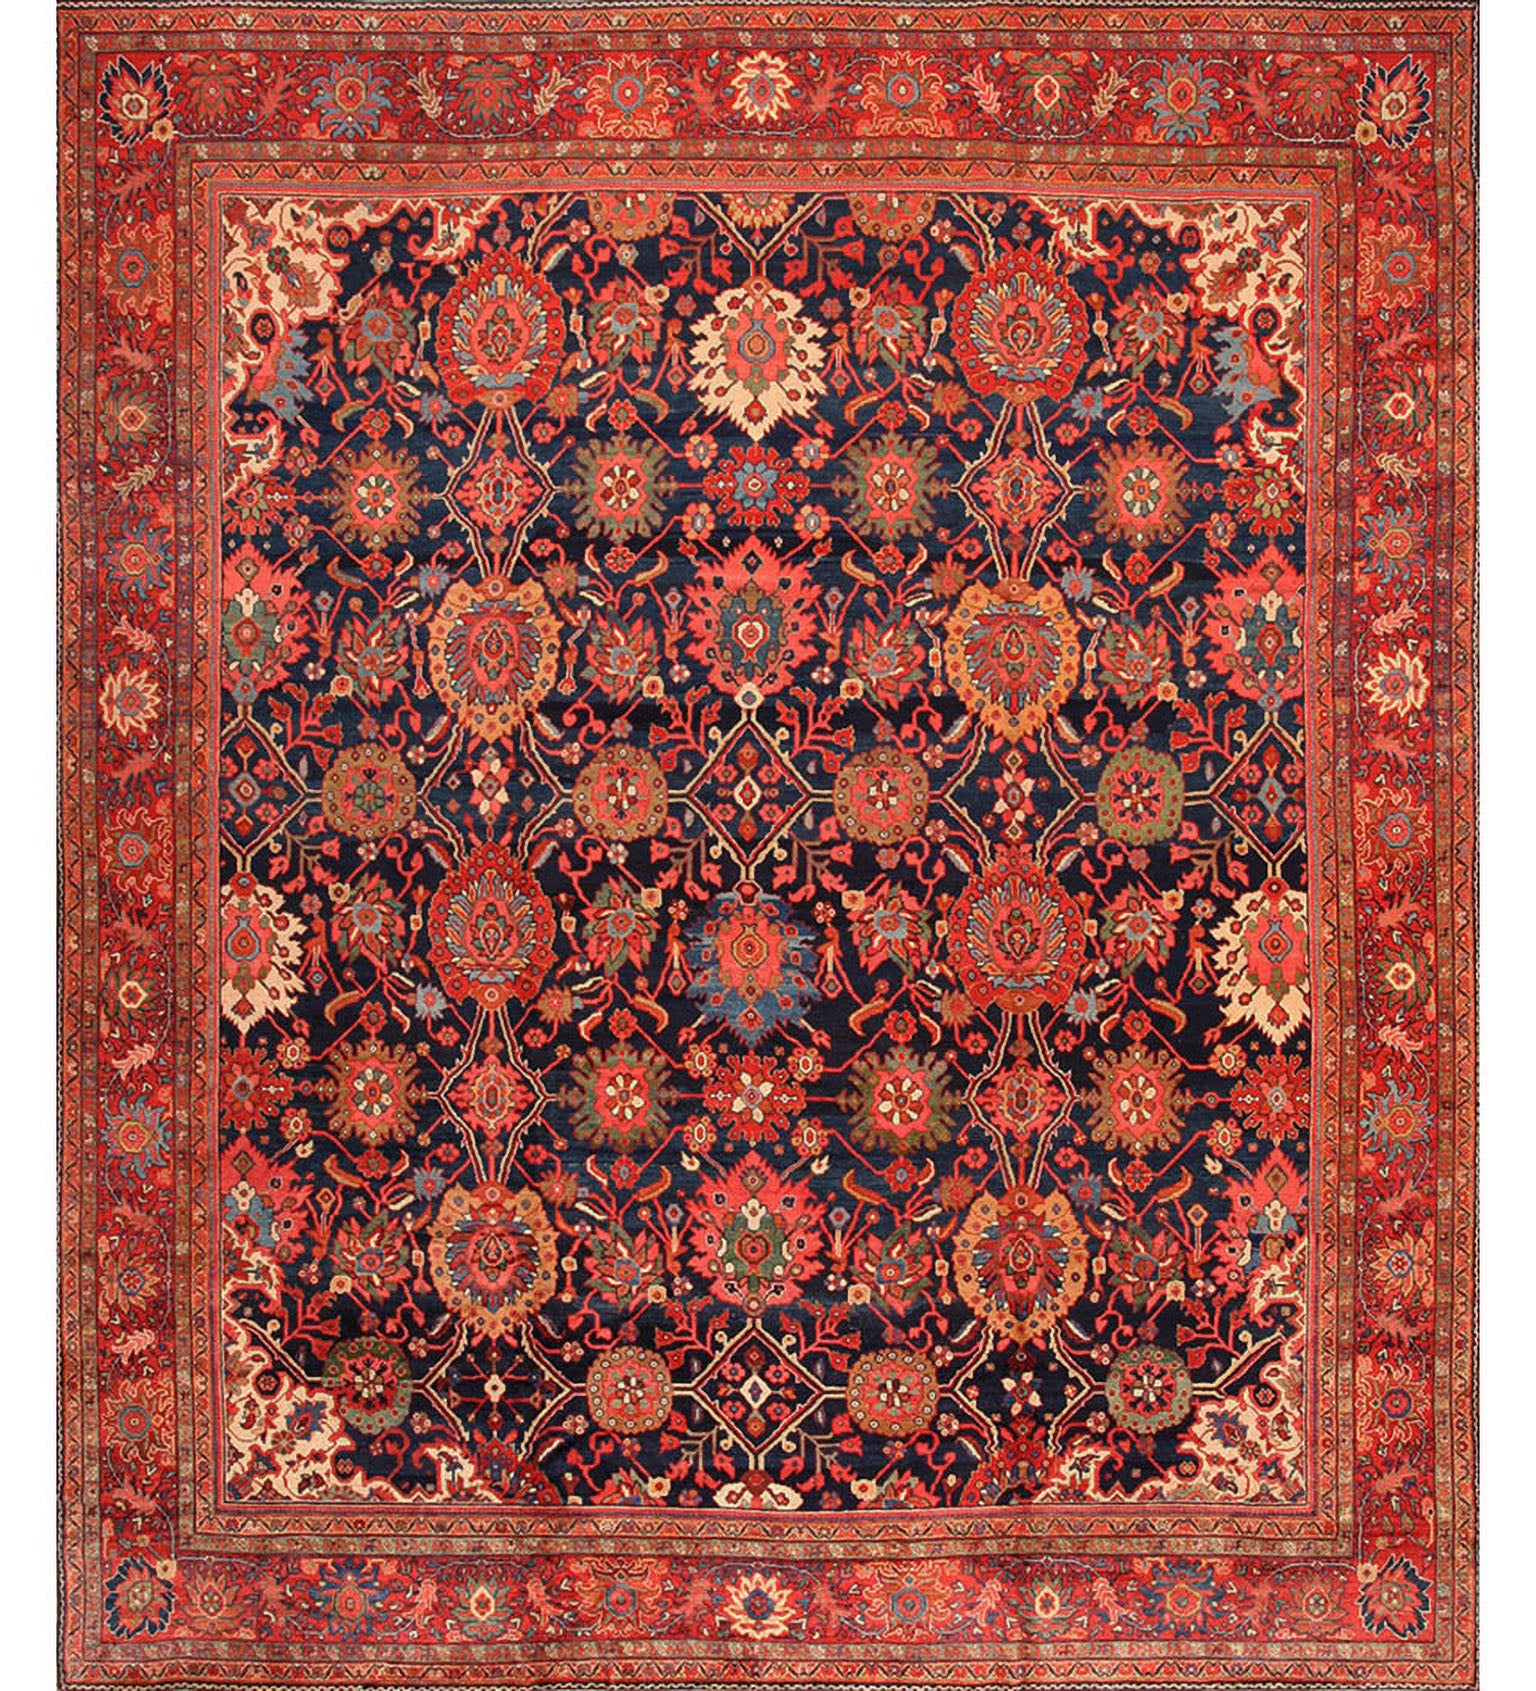 19th Century Persian Ziegler Sultanabad Carpet ( 11'6" x 13'8" - 351 x 417 )